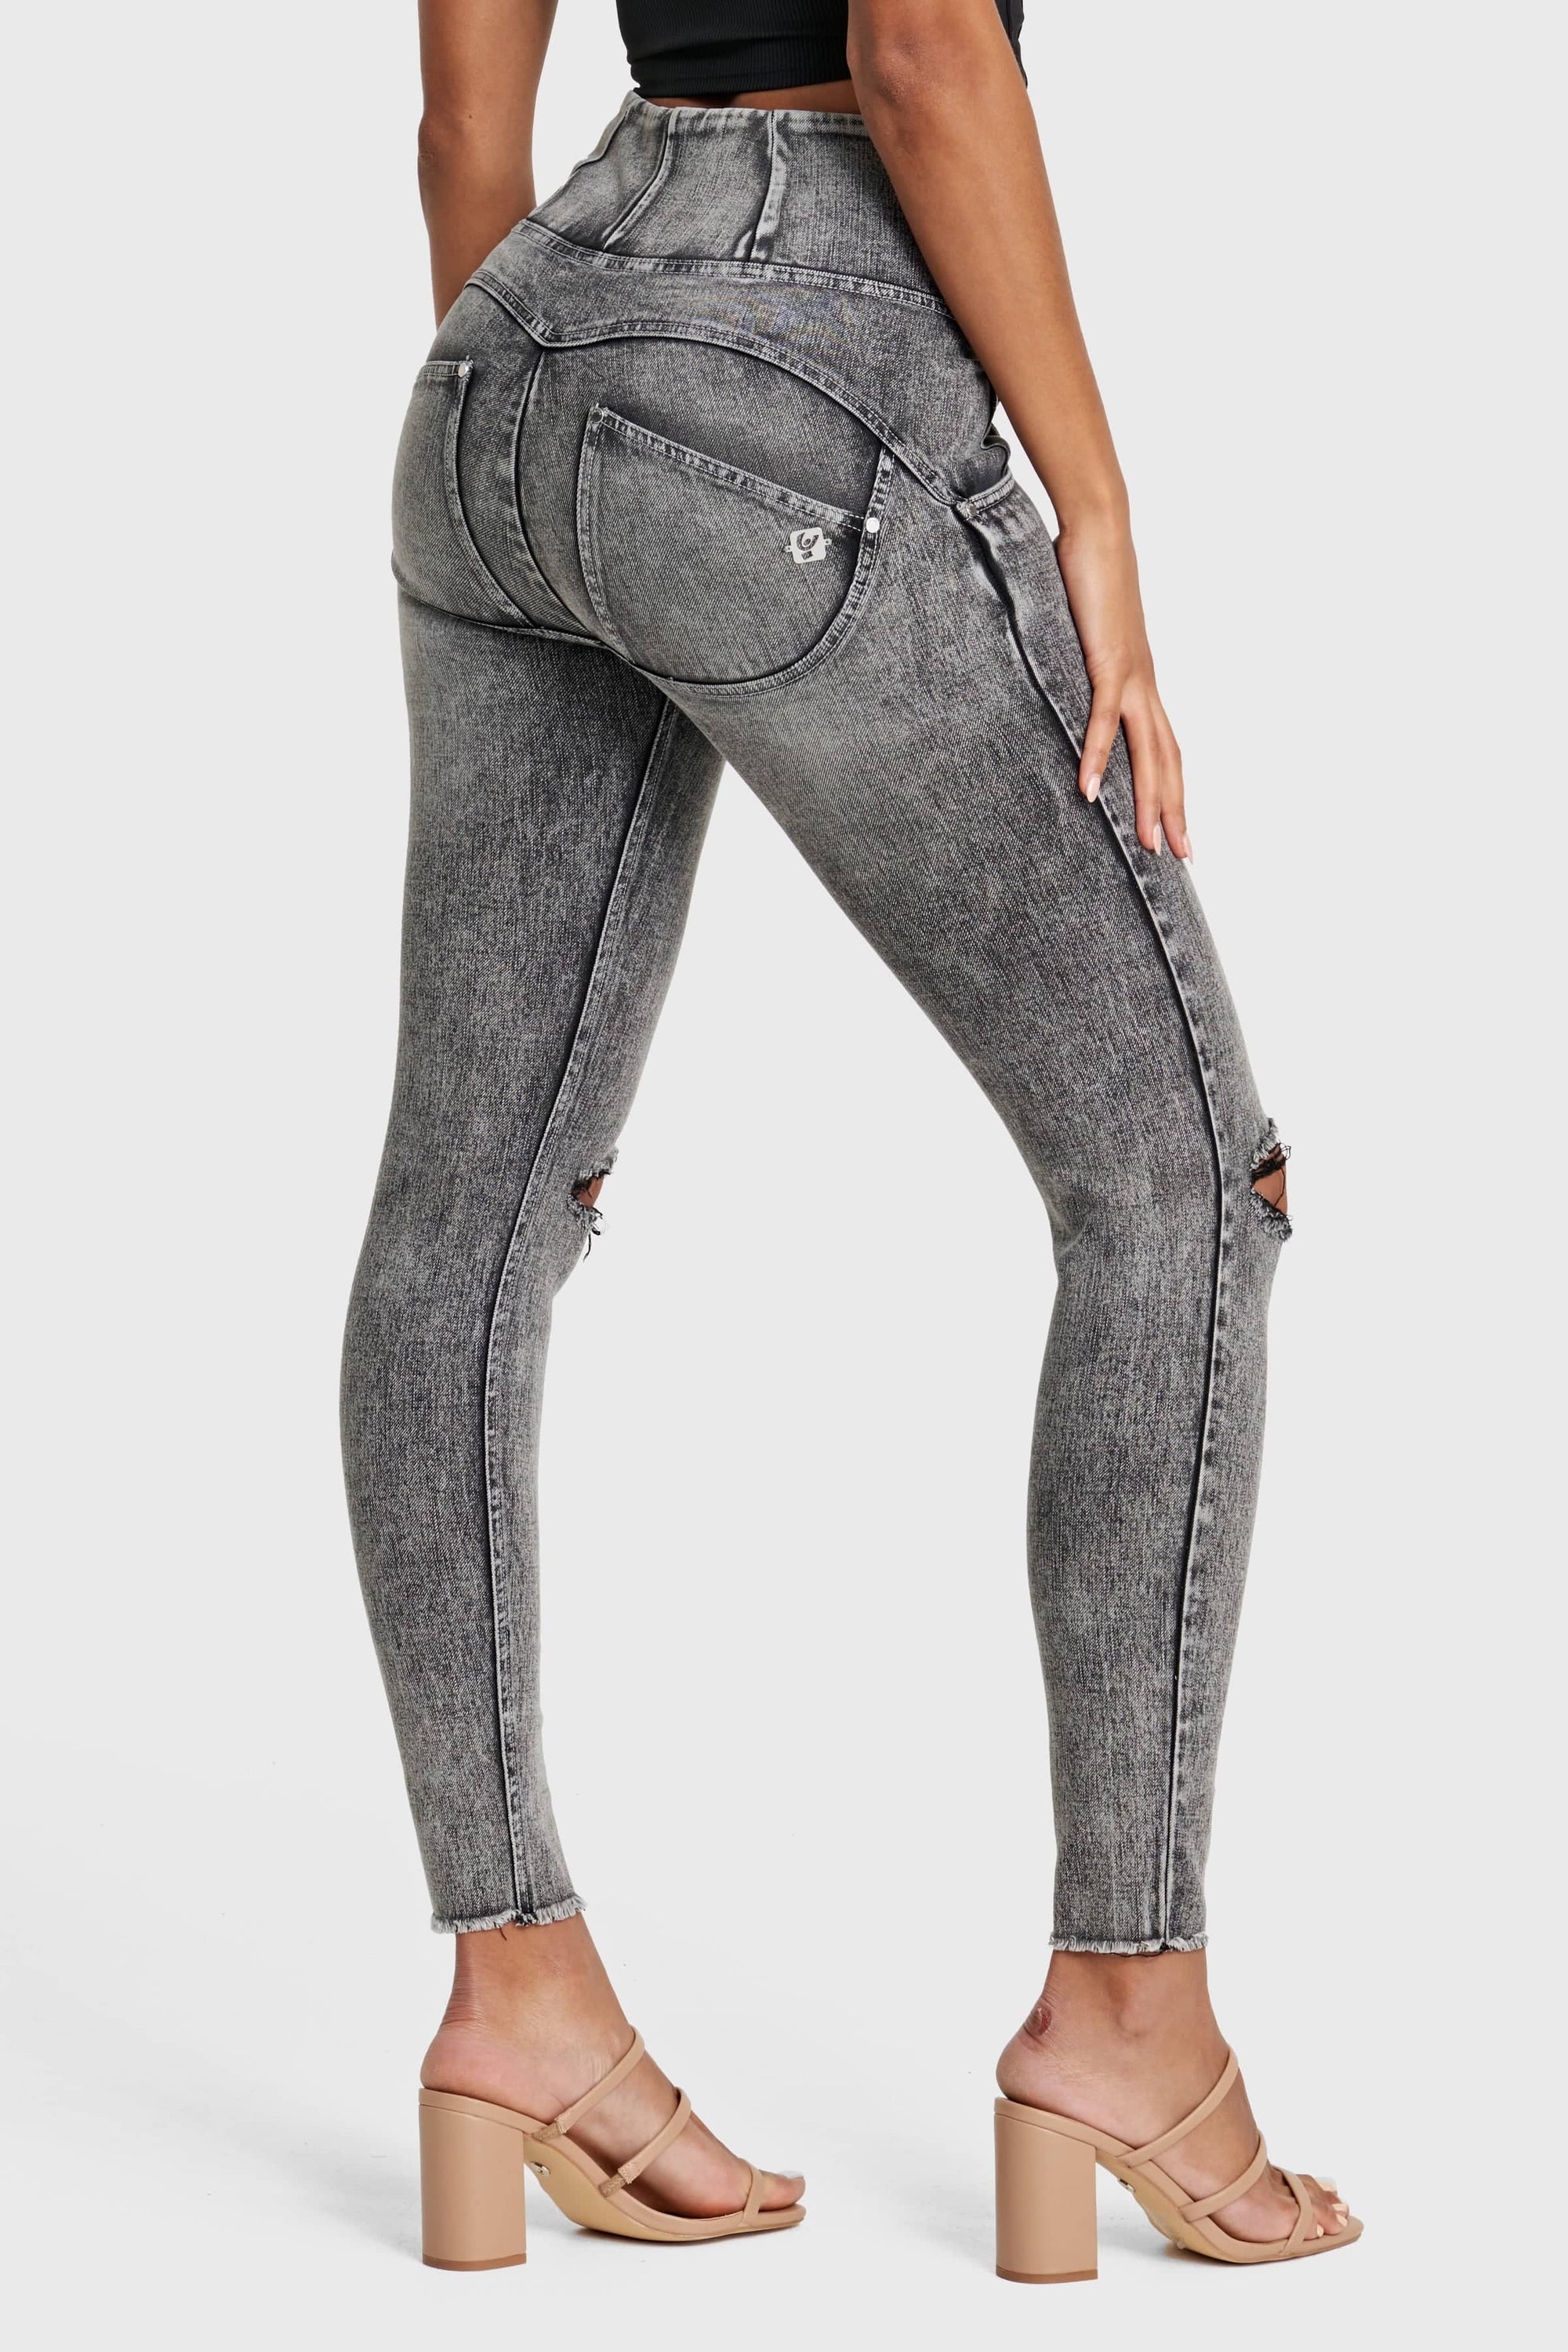 WR.UP® Snug Ripped Jeans - High Waisted - Full Length - Grey Stonewash + Grey Stitching 11